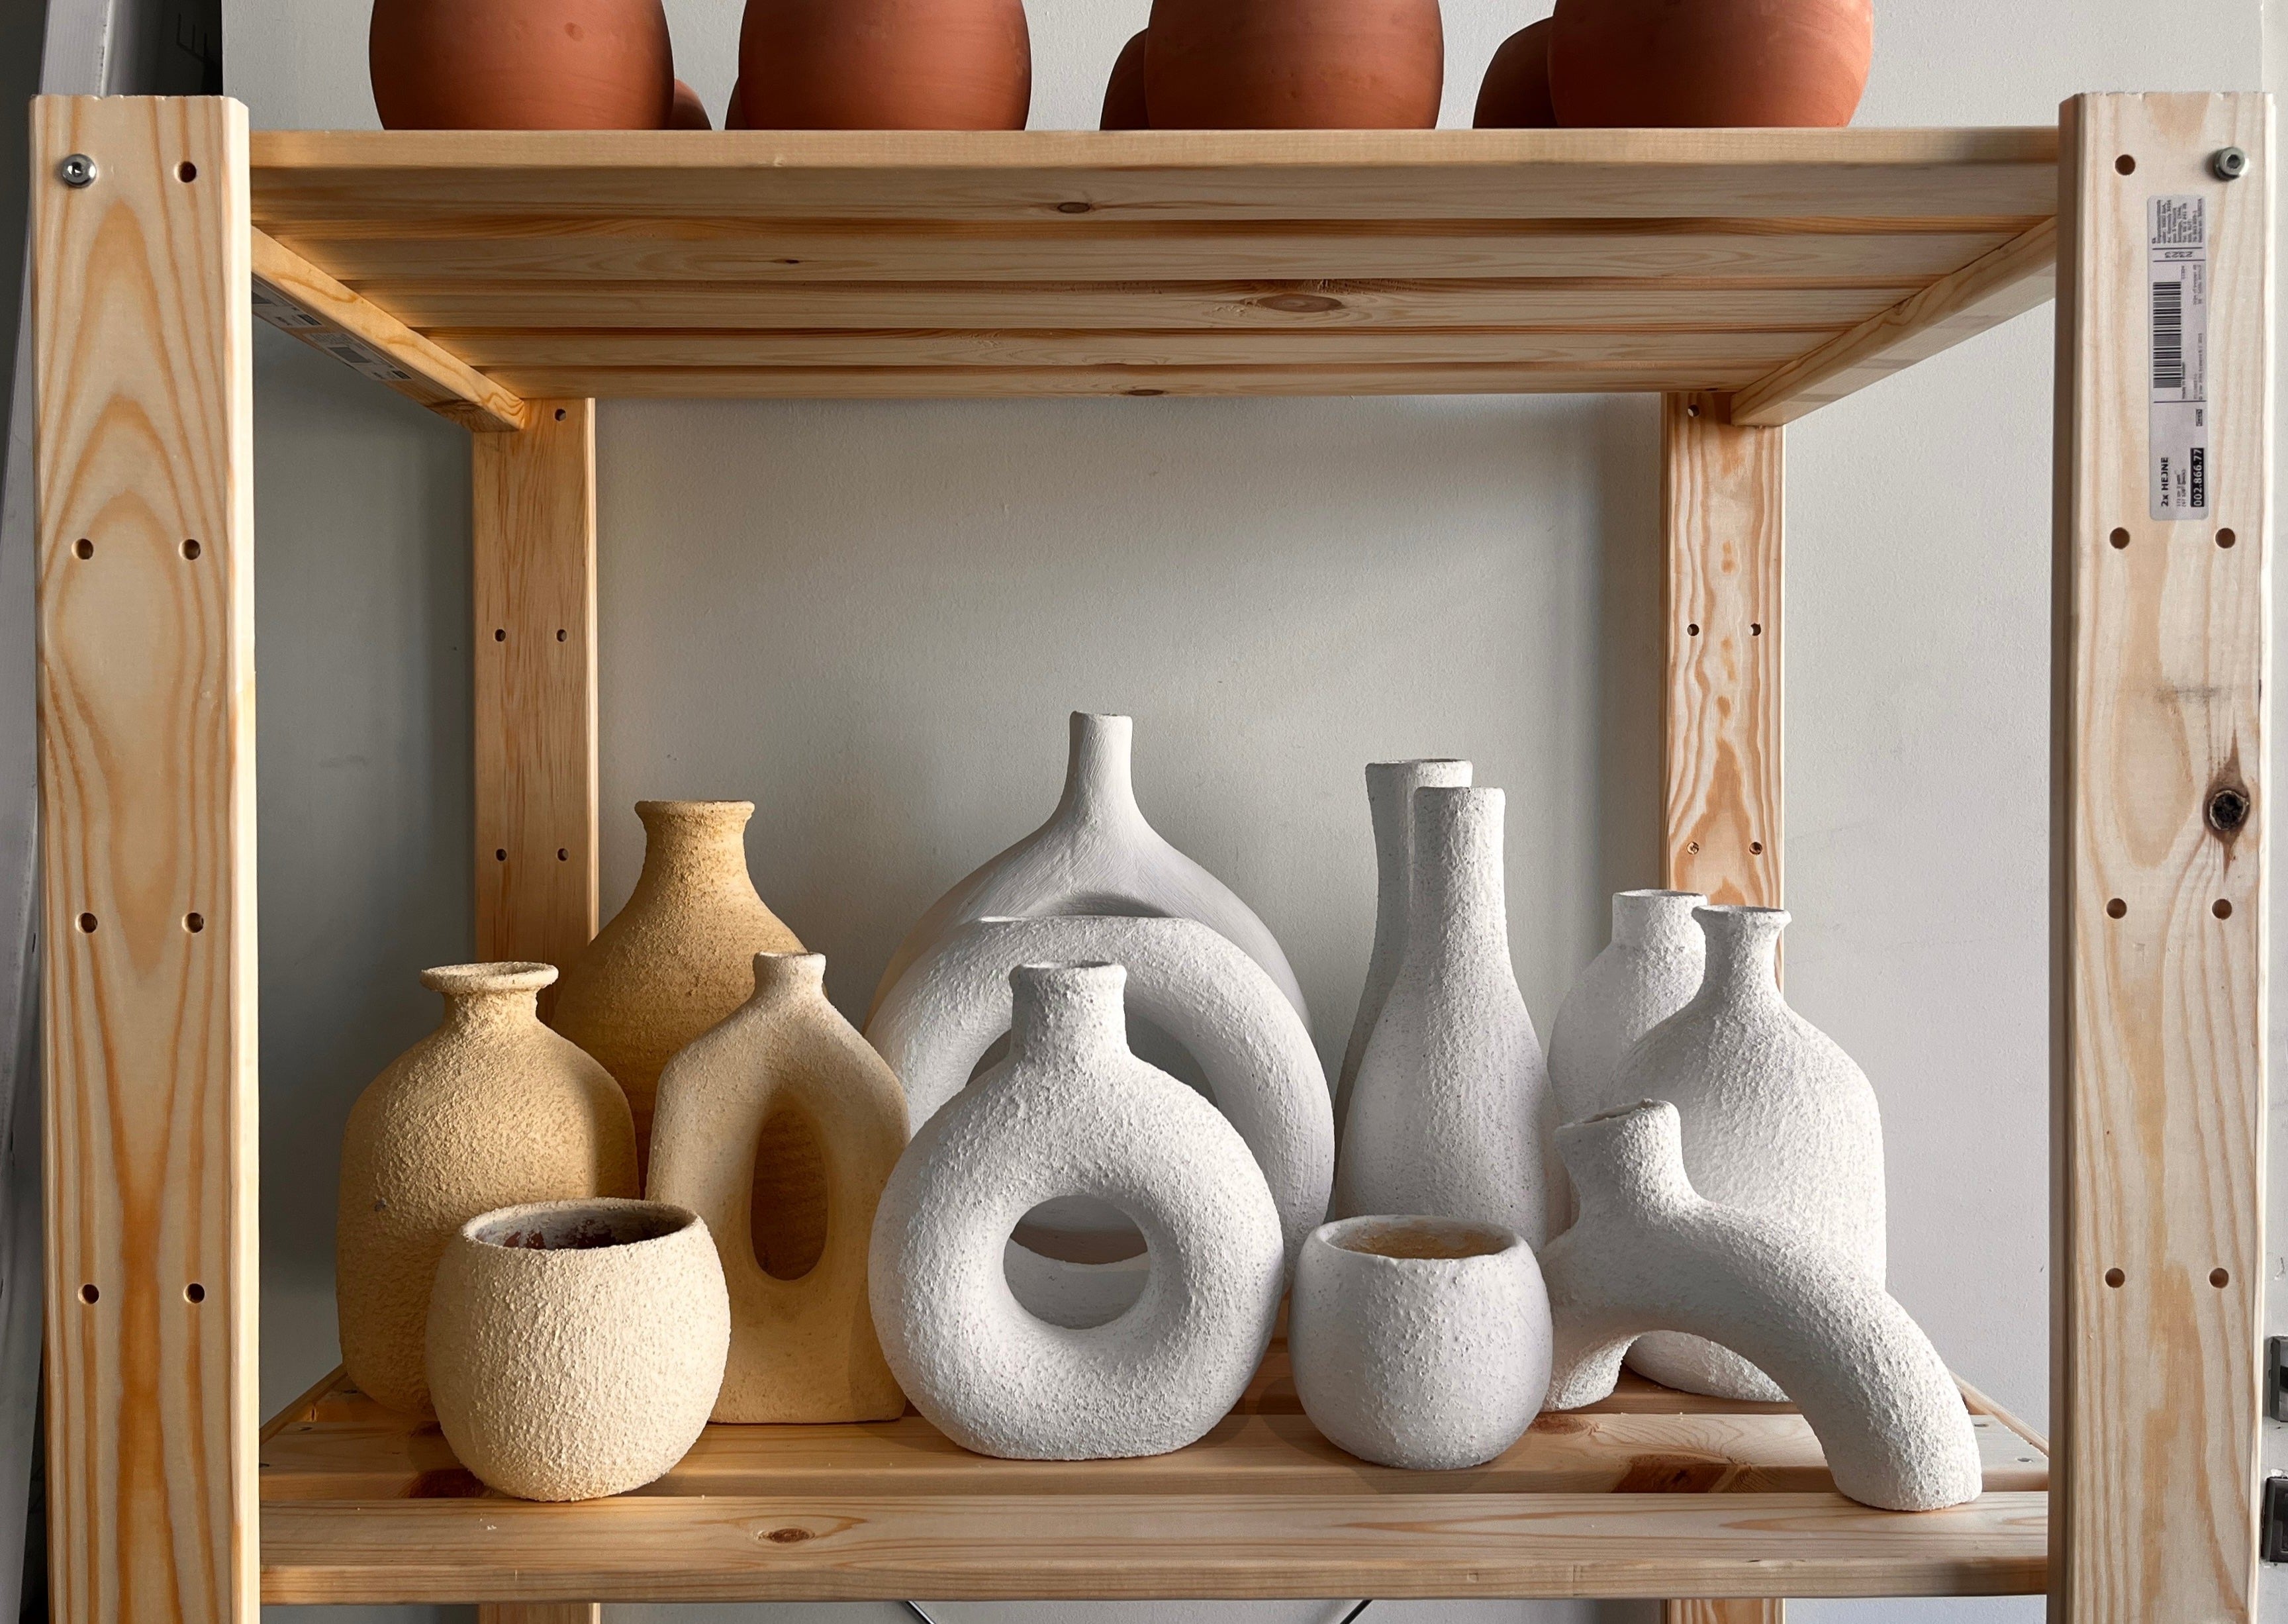 Clay Vase & Mug Making